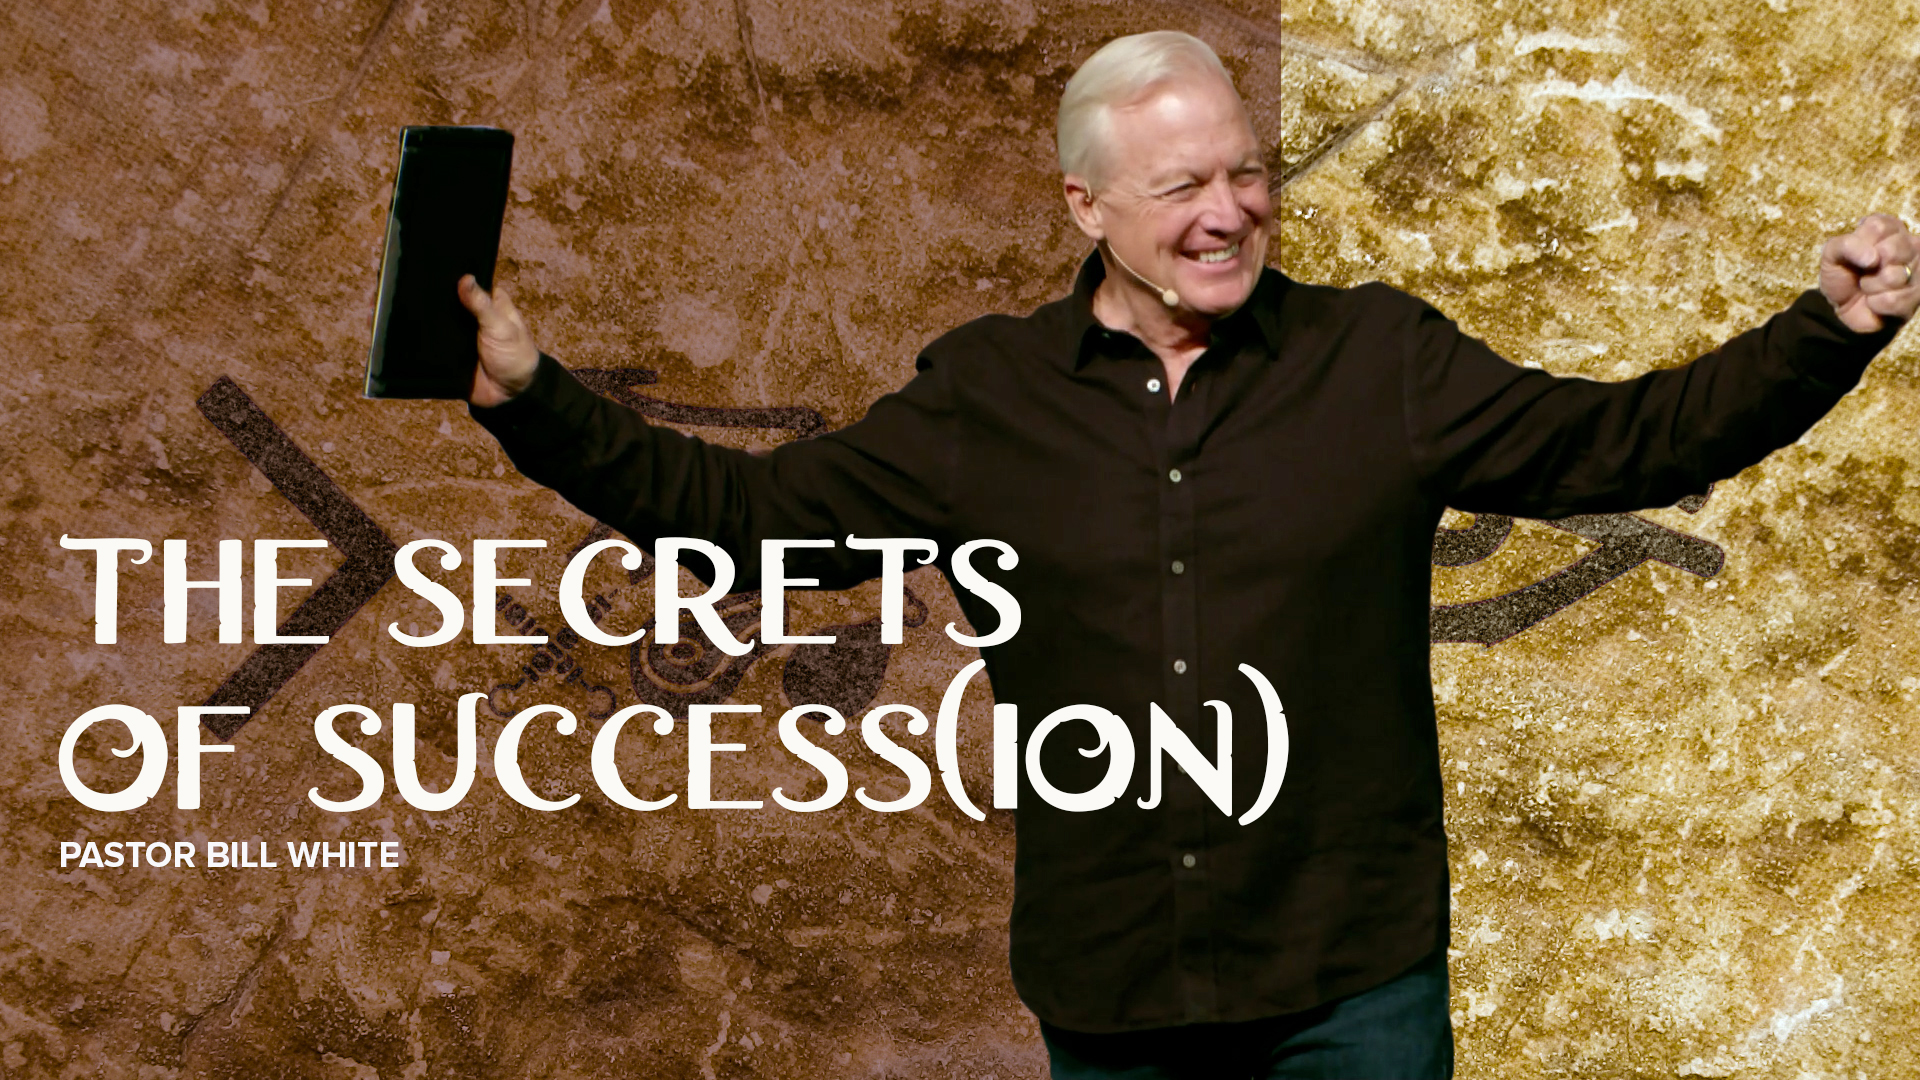 The Secrets of Success(ION)